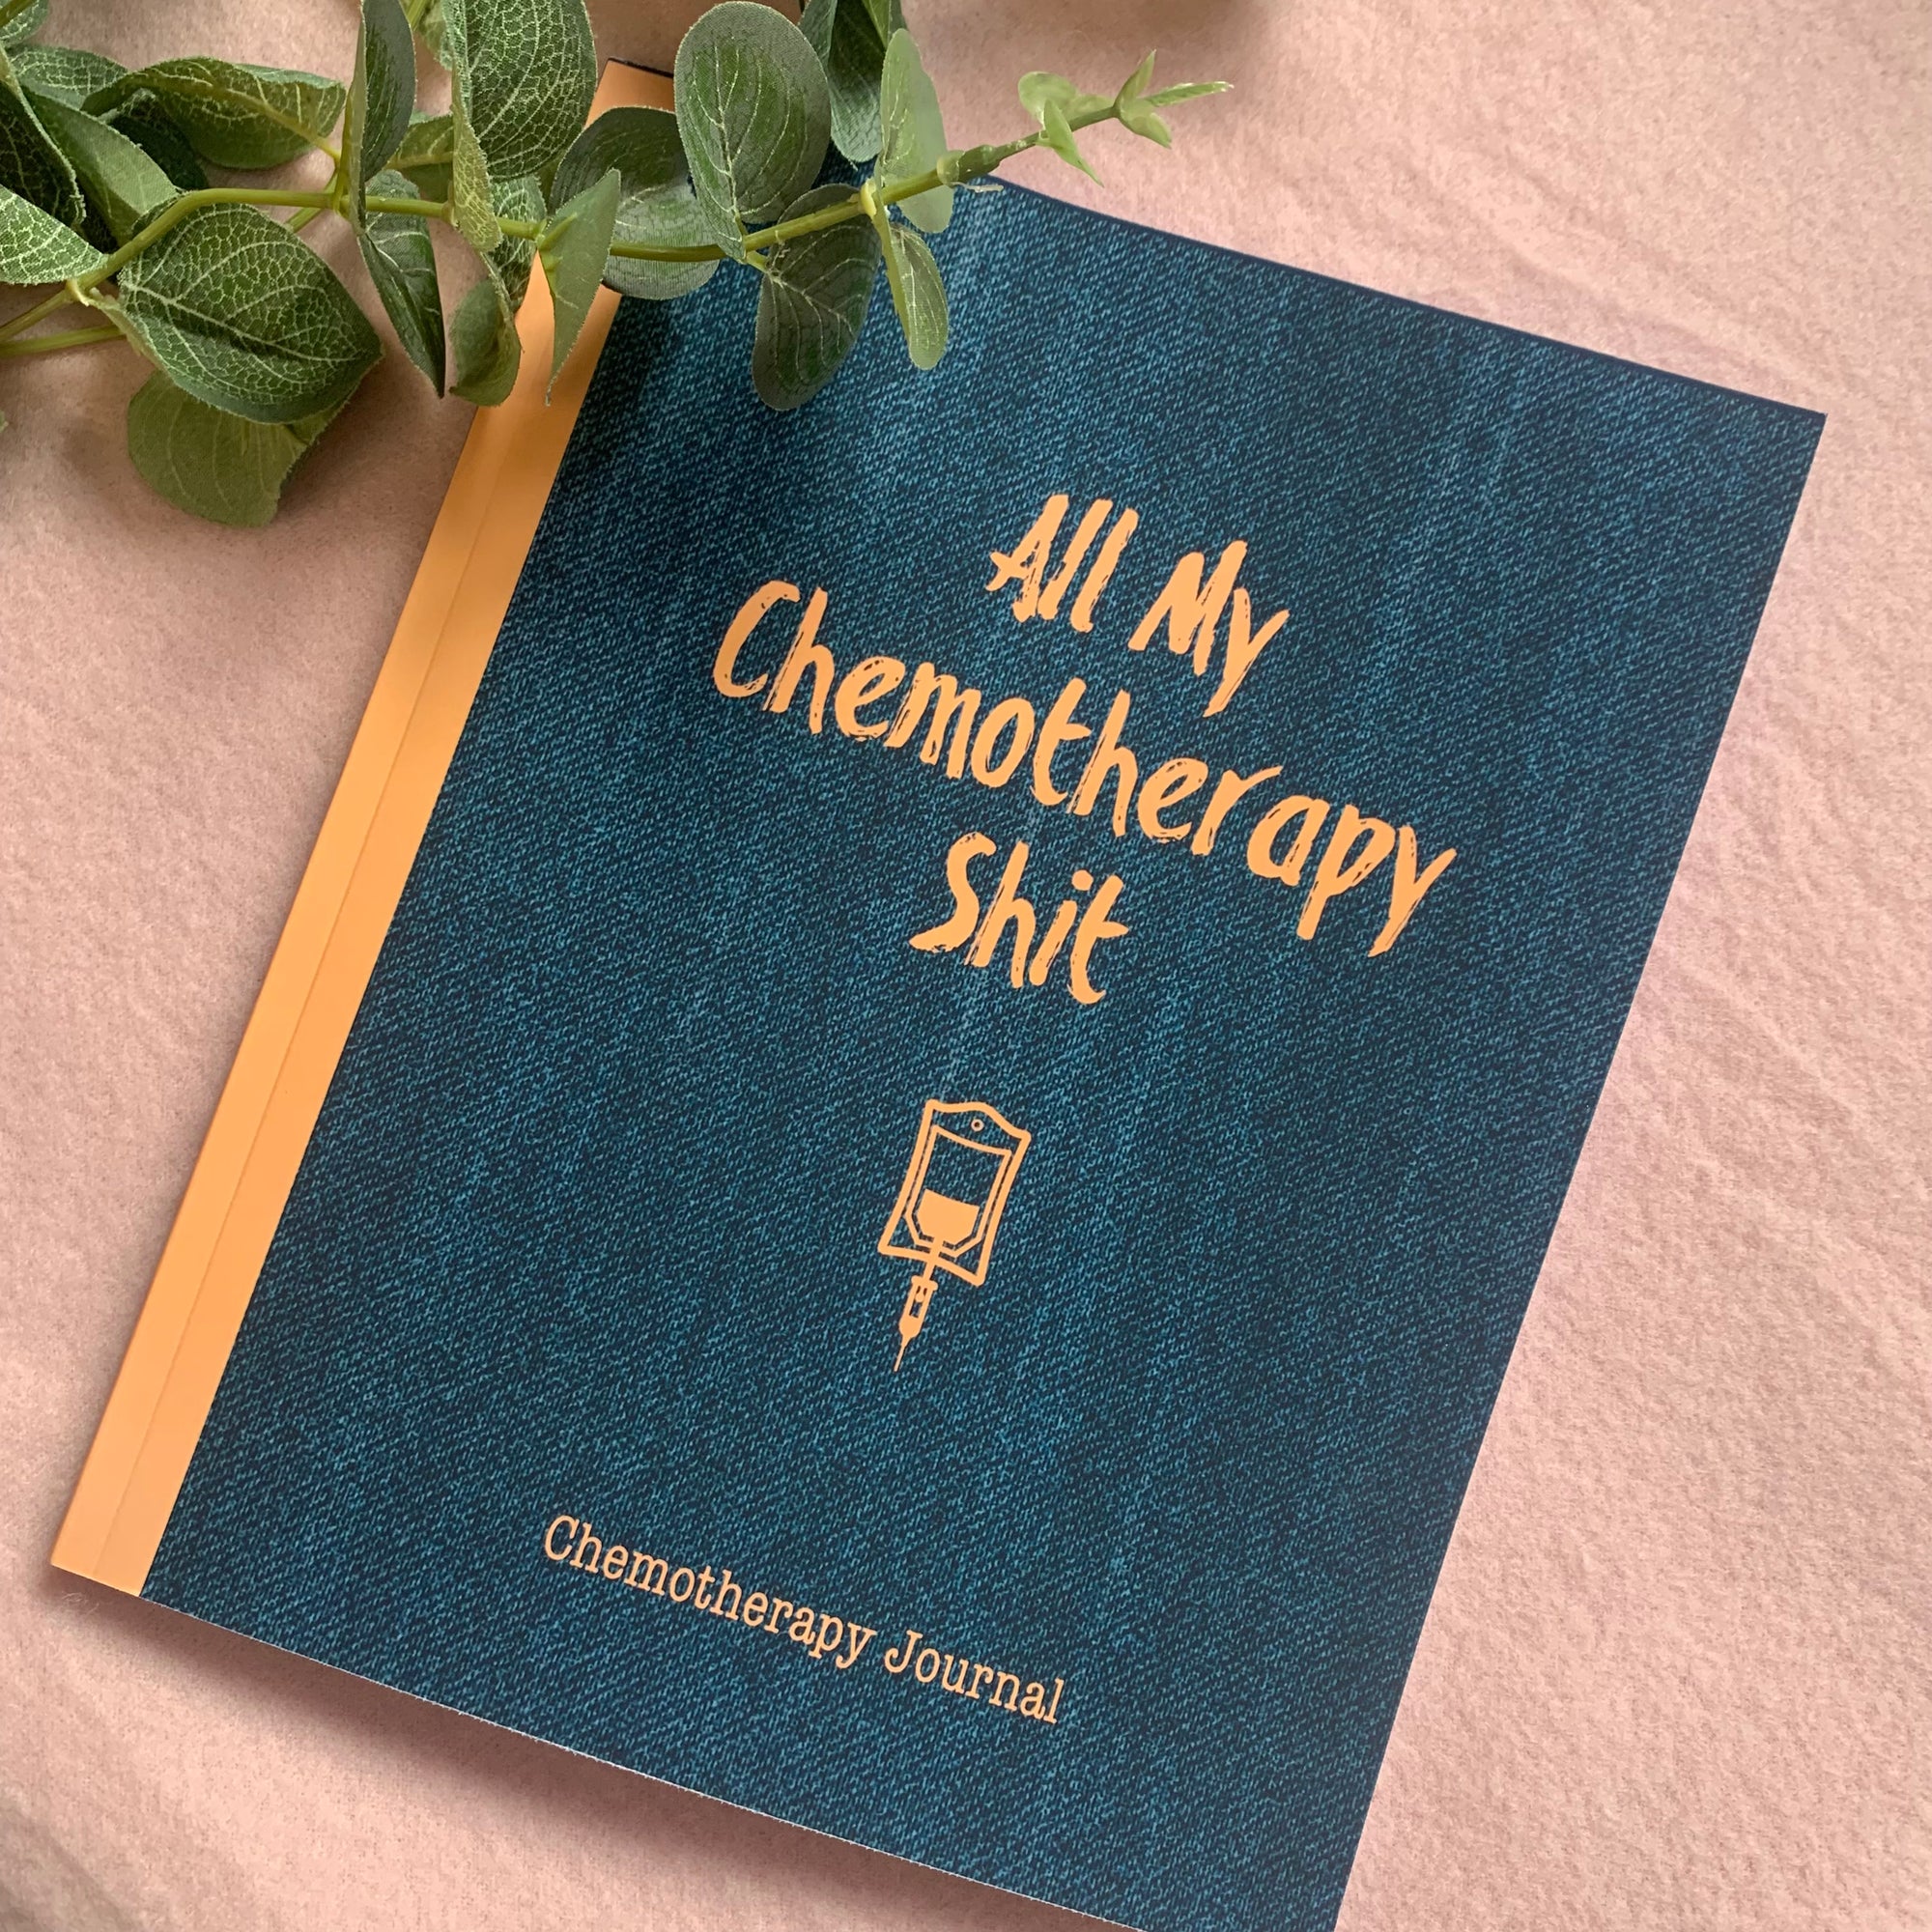 Chemotherapy Journal: All My Chemotherapy Shit